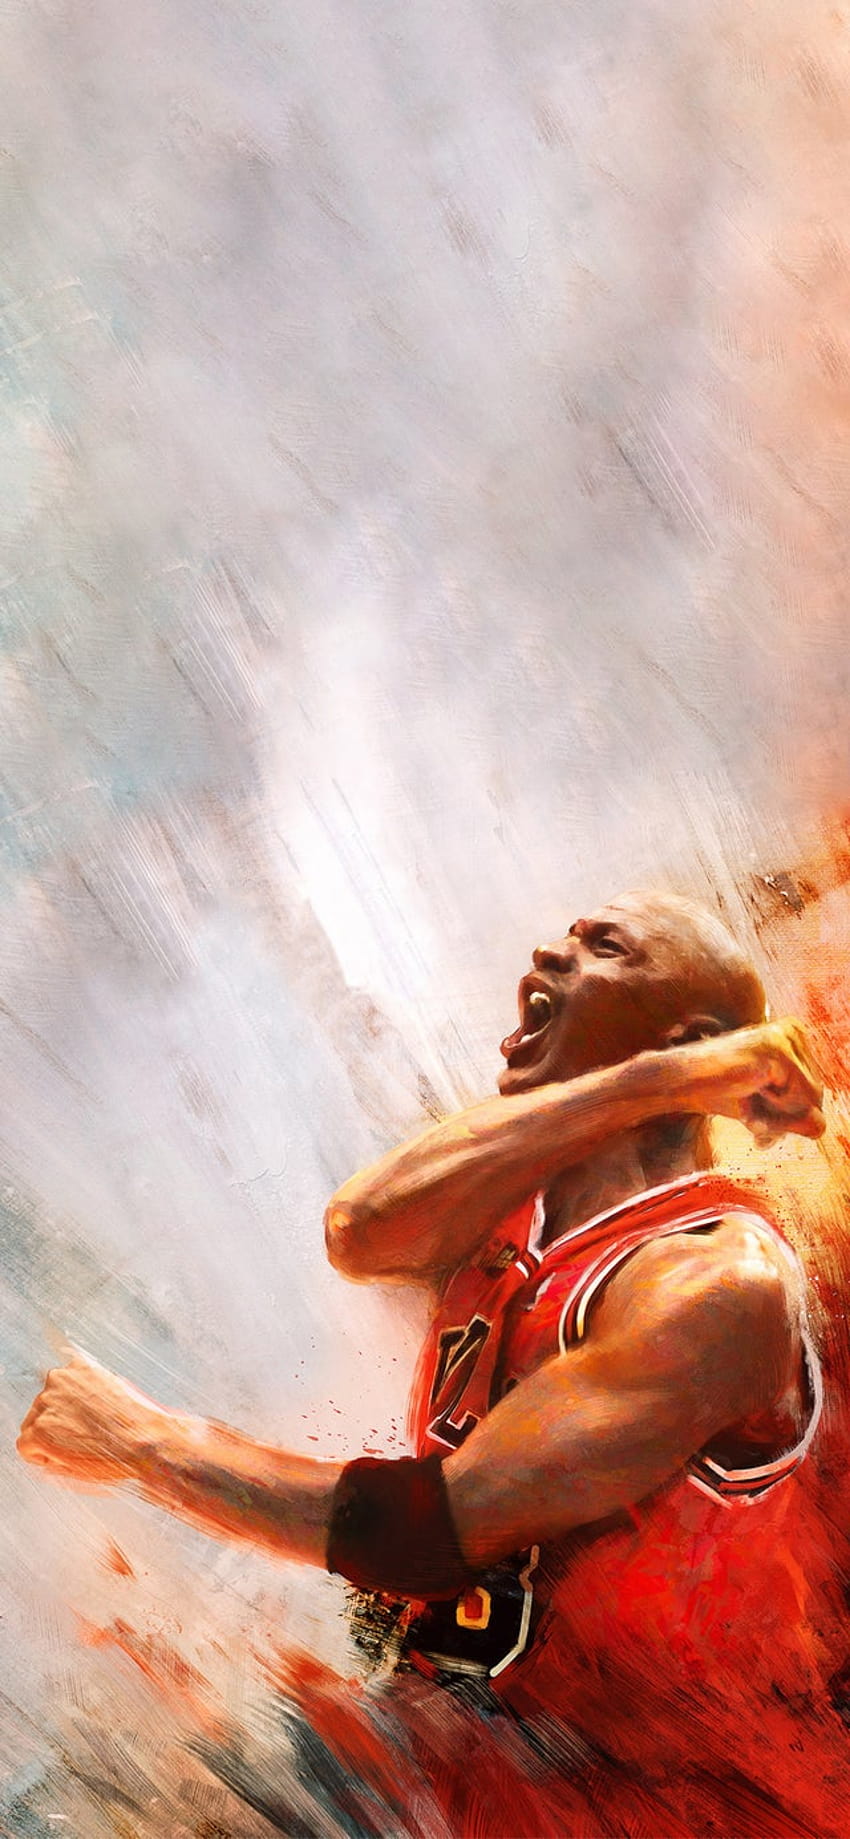 NBA 23 Michael Jordan Edition converted it into a mobile HD phone wallpaper